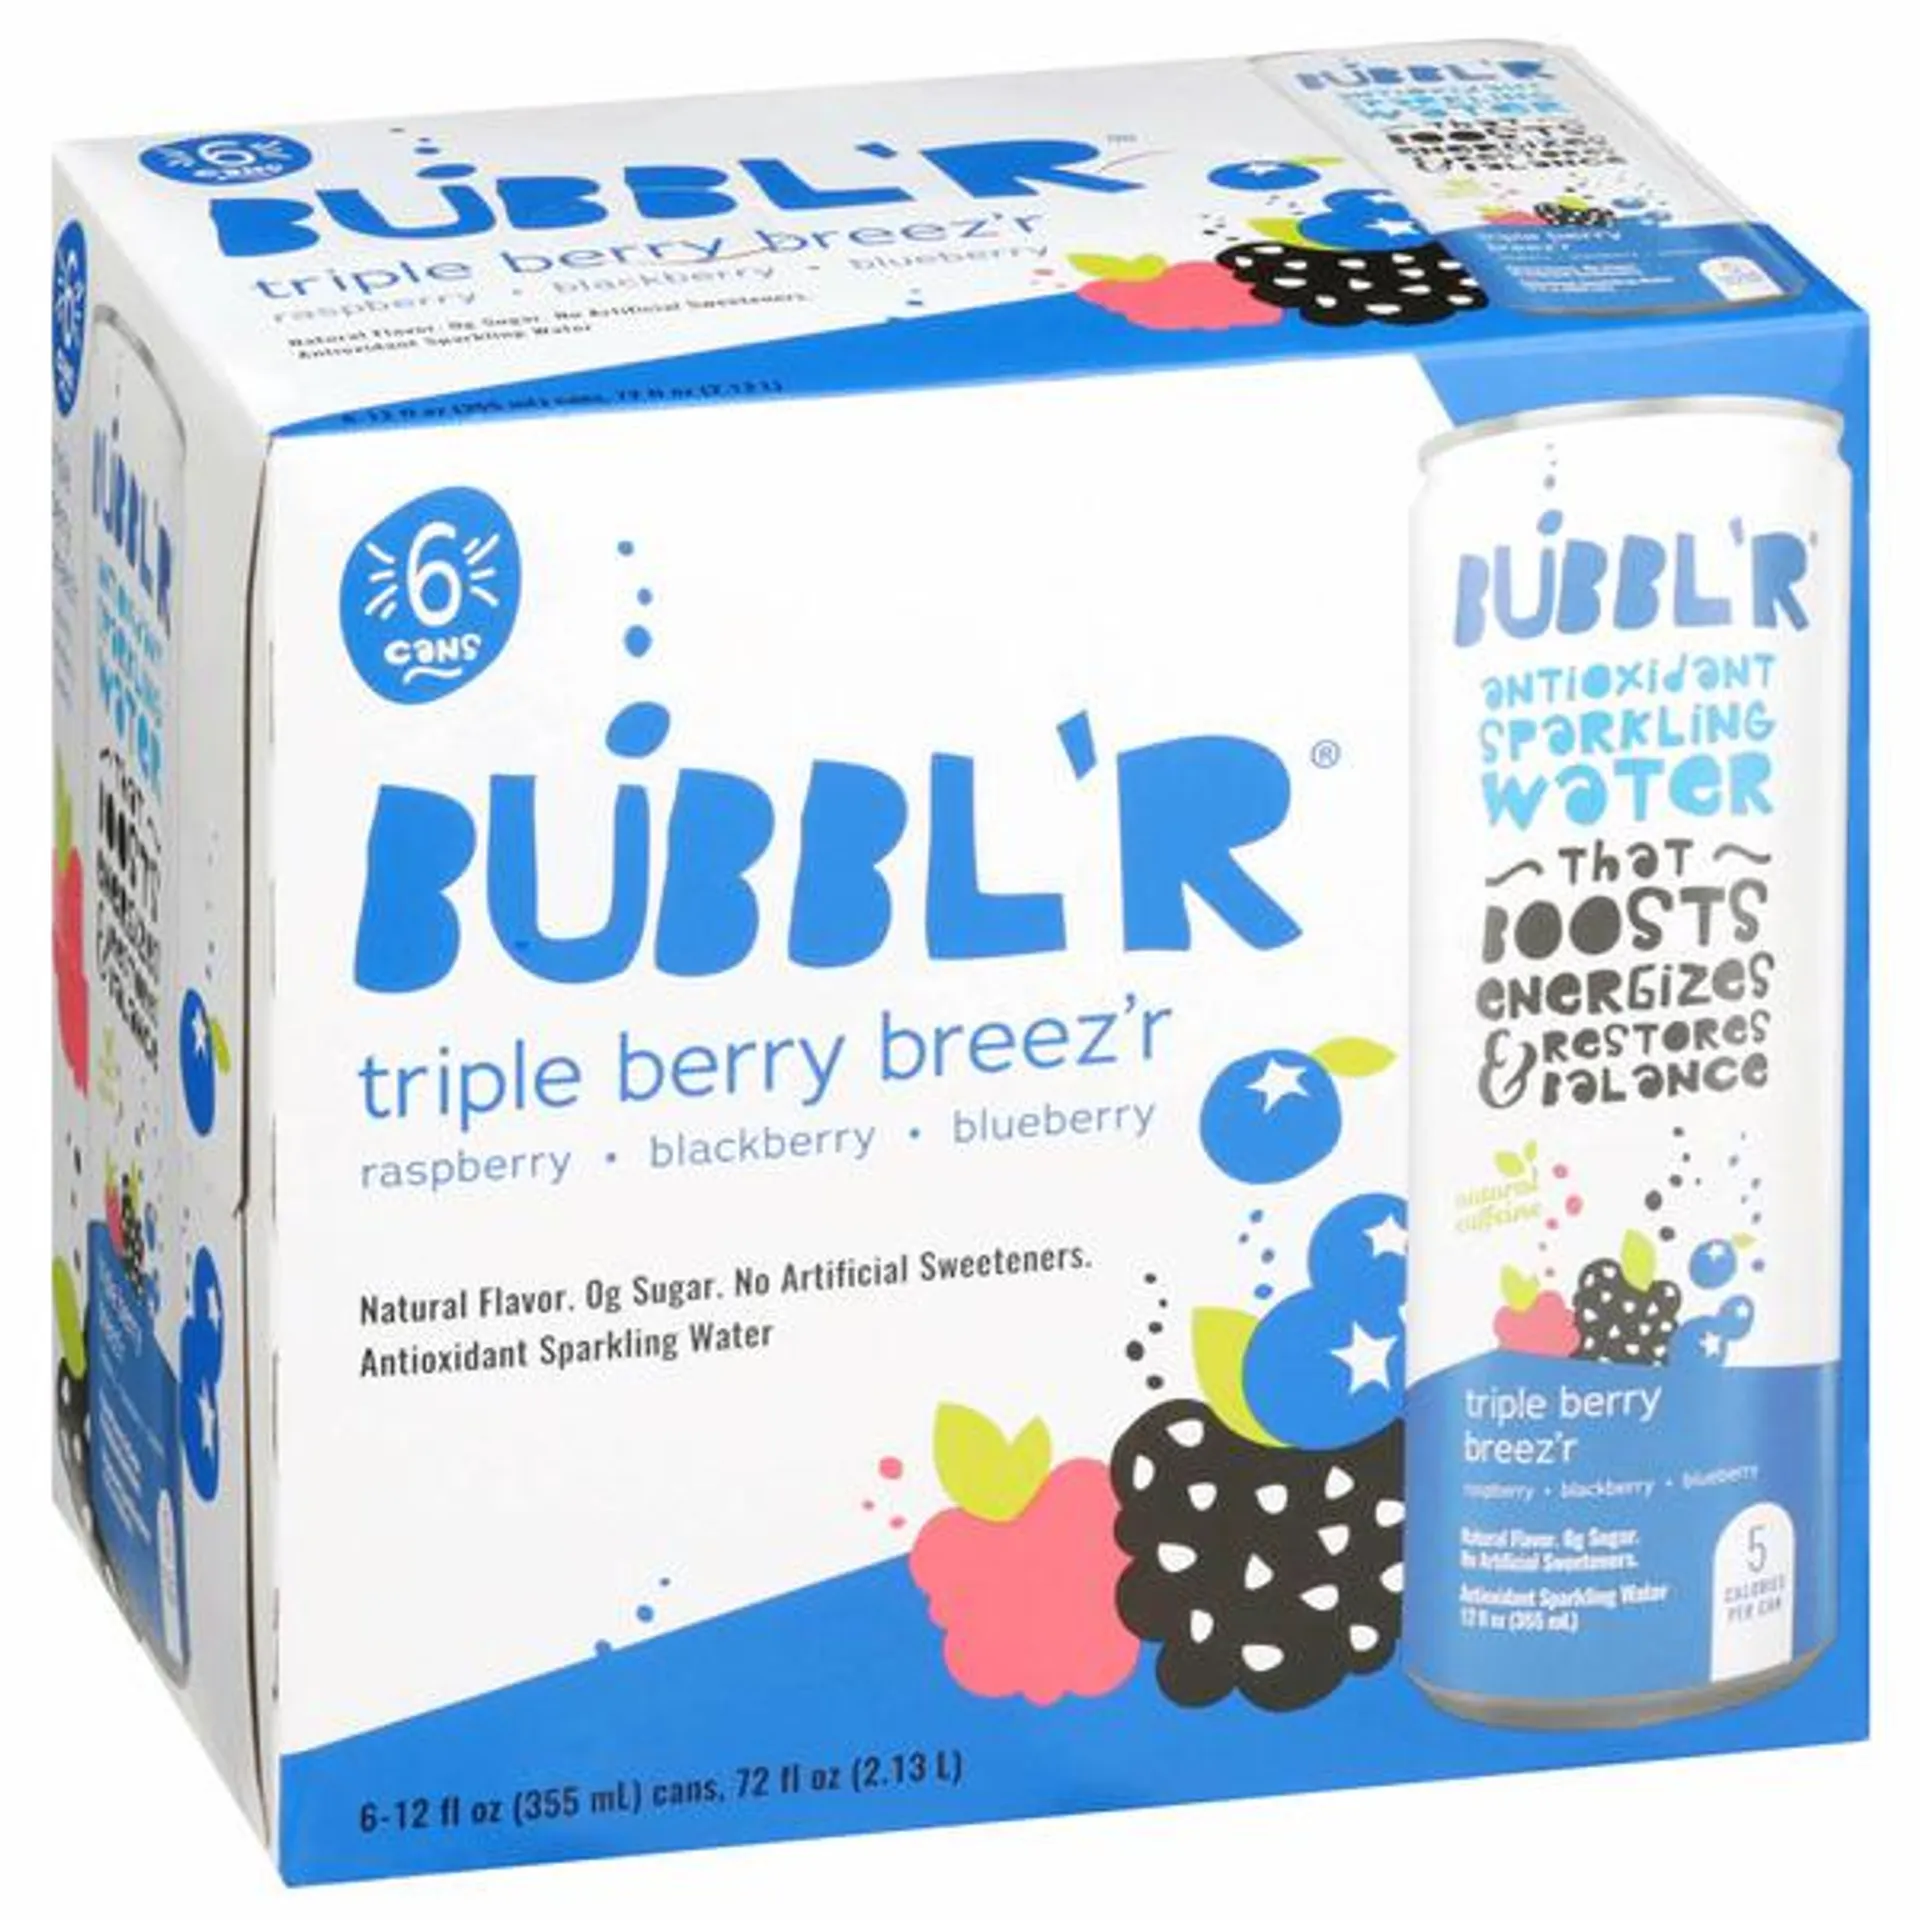 BUBBL’R Antioxidant Sparkling Water, triple berry breez'r